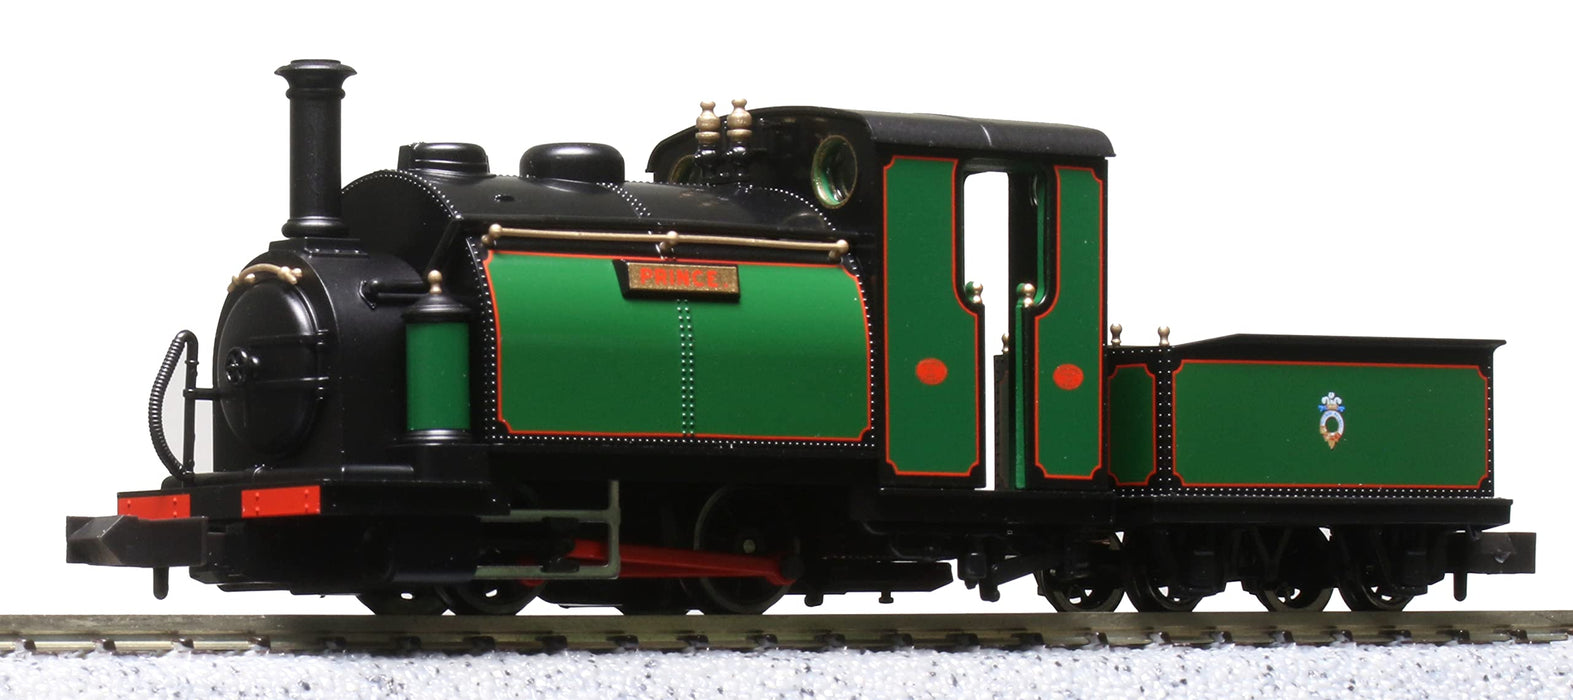 KATO HO Gauge (OO-9) KATO/PECO Small England Prince (Green) 51-201G Model Train_1